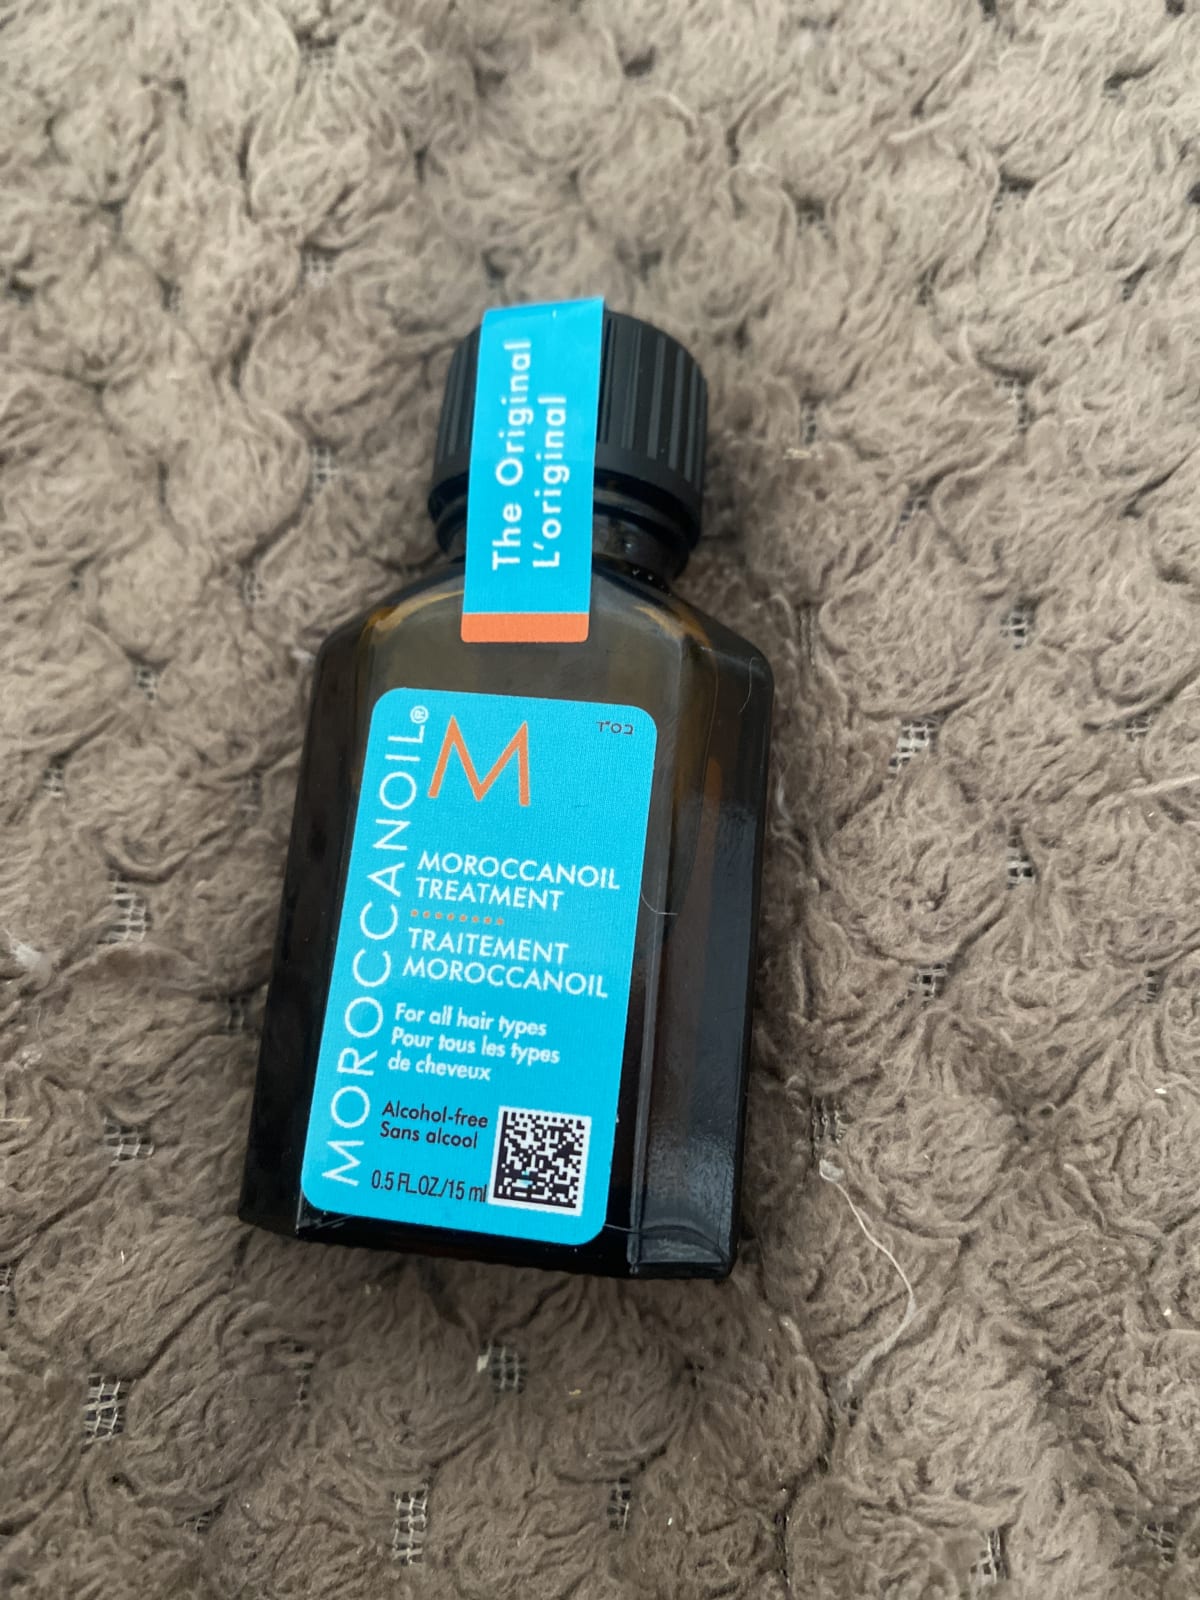 Moroccanoil Treatment Original - before review image